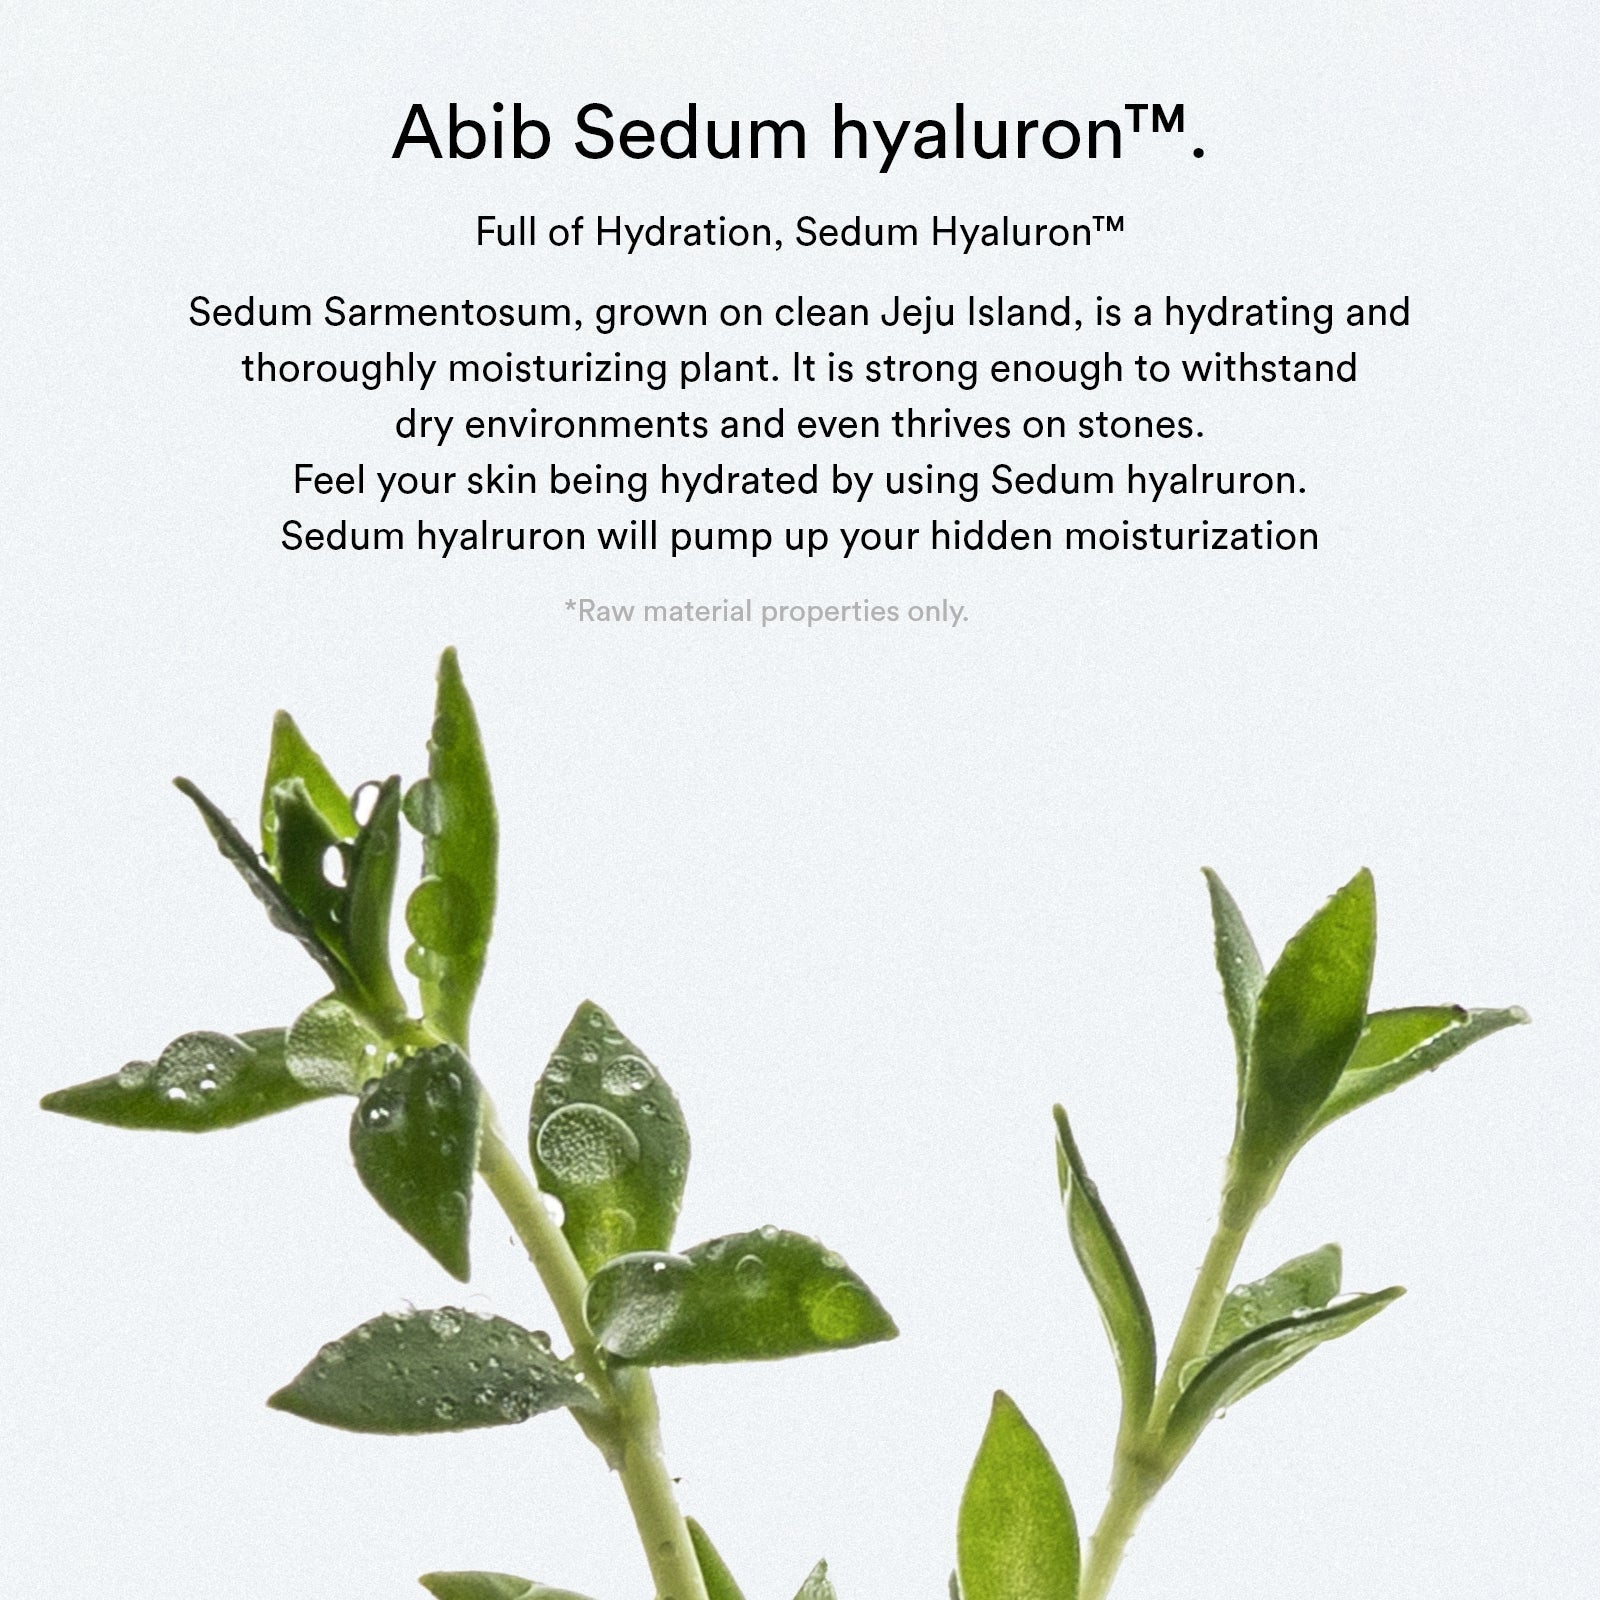 Abib Sedum Hyaluron Pad Hydrating Touch 60pcs - Abib | Kiokii and...